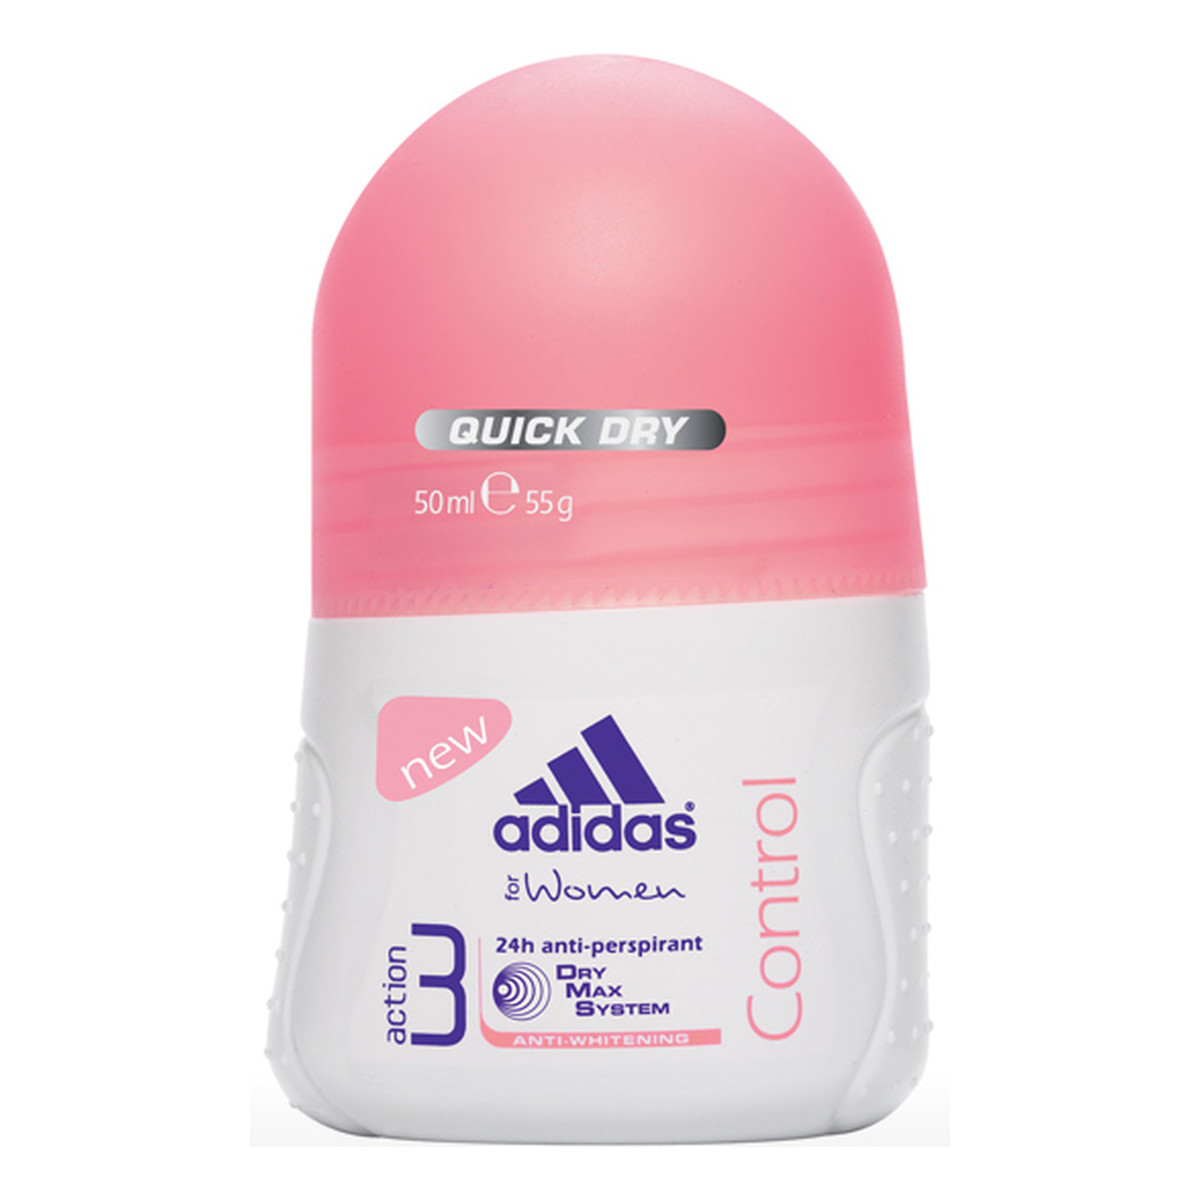 Adidas Action 3 Woman Control Dezodorant Roll On 50ml